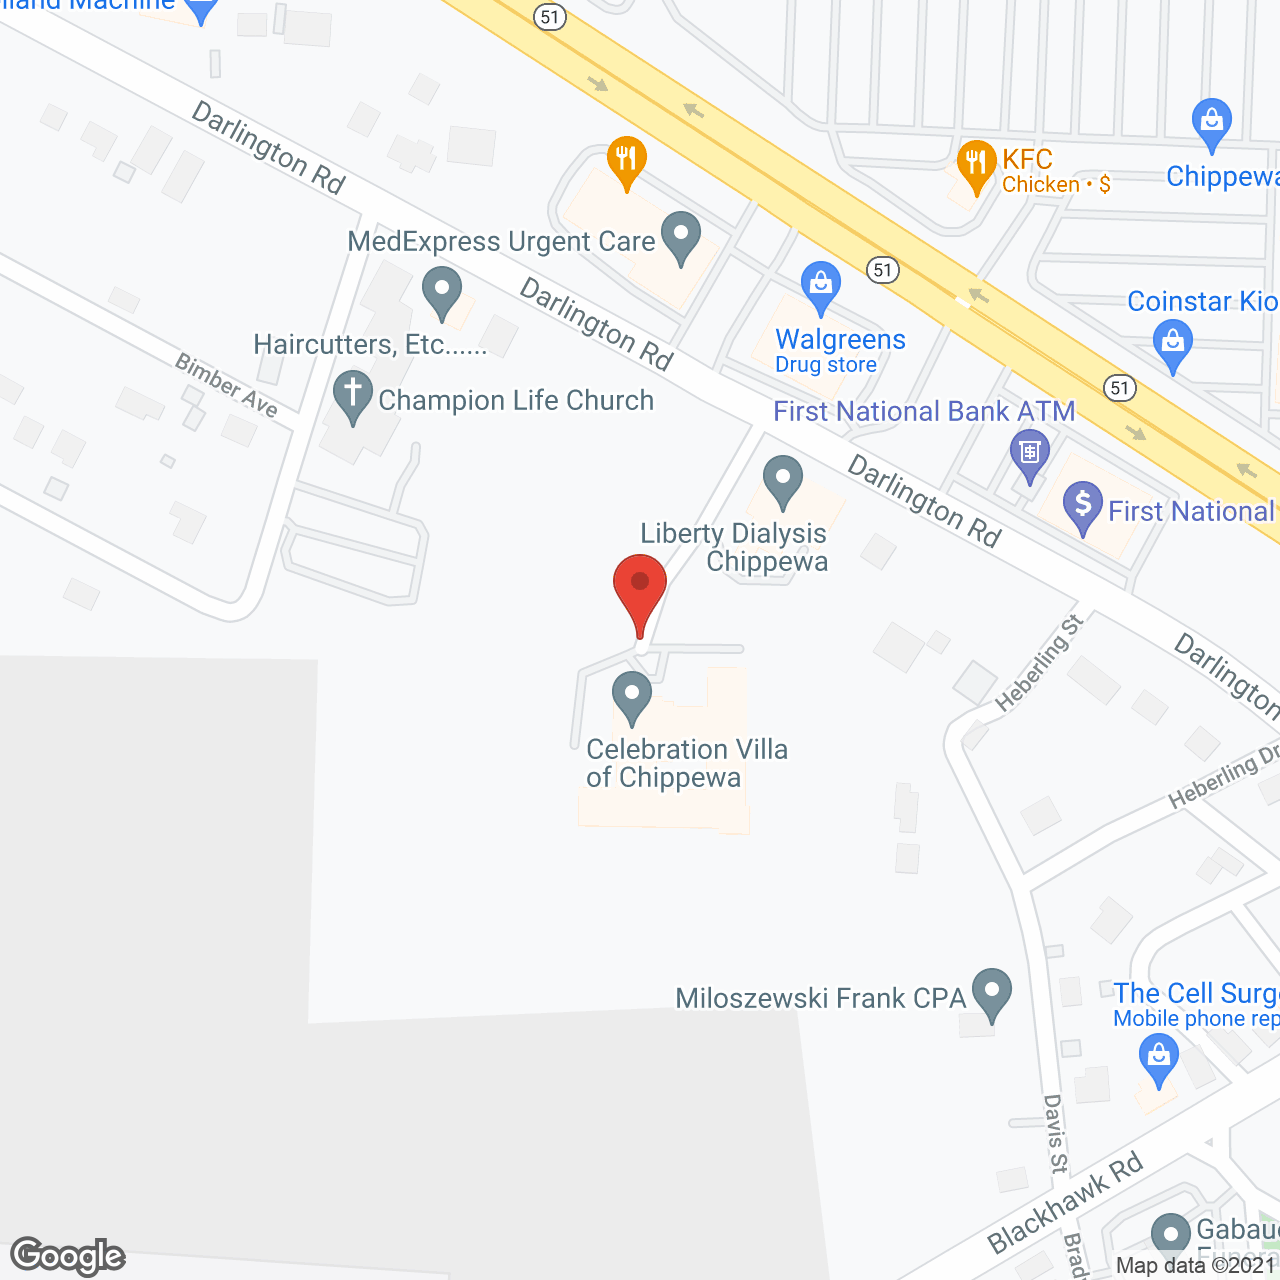 Celebration Villa of Chippewa in google map